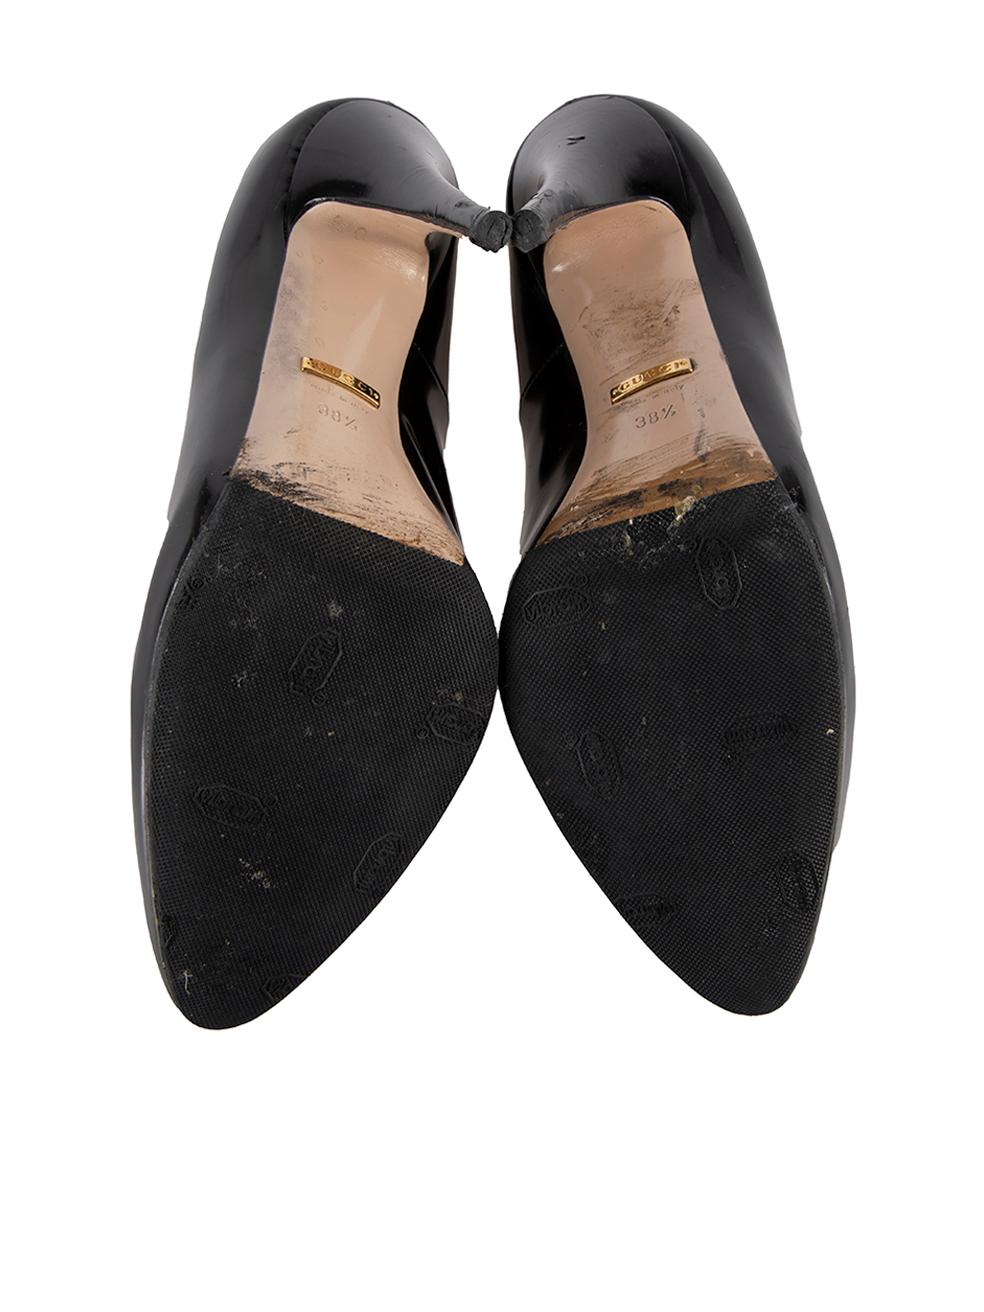 Gucci Women's Black Patent Leather Almond Toe Heels 1